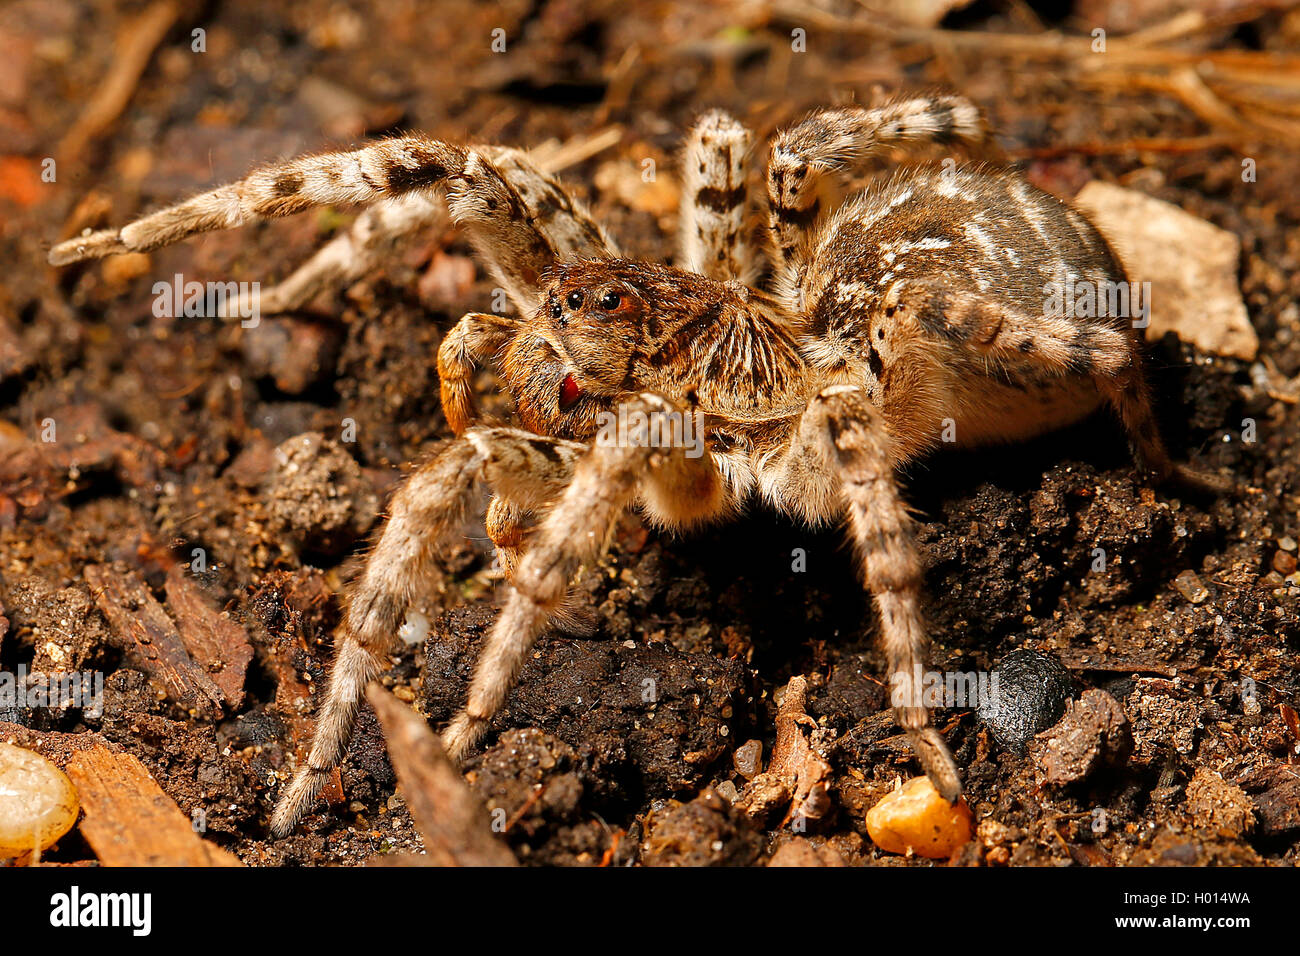 South Russia tarantula (Lycosa singoriensis), on the ground, Austria Stock Photo